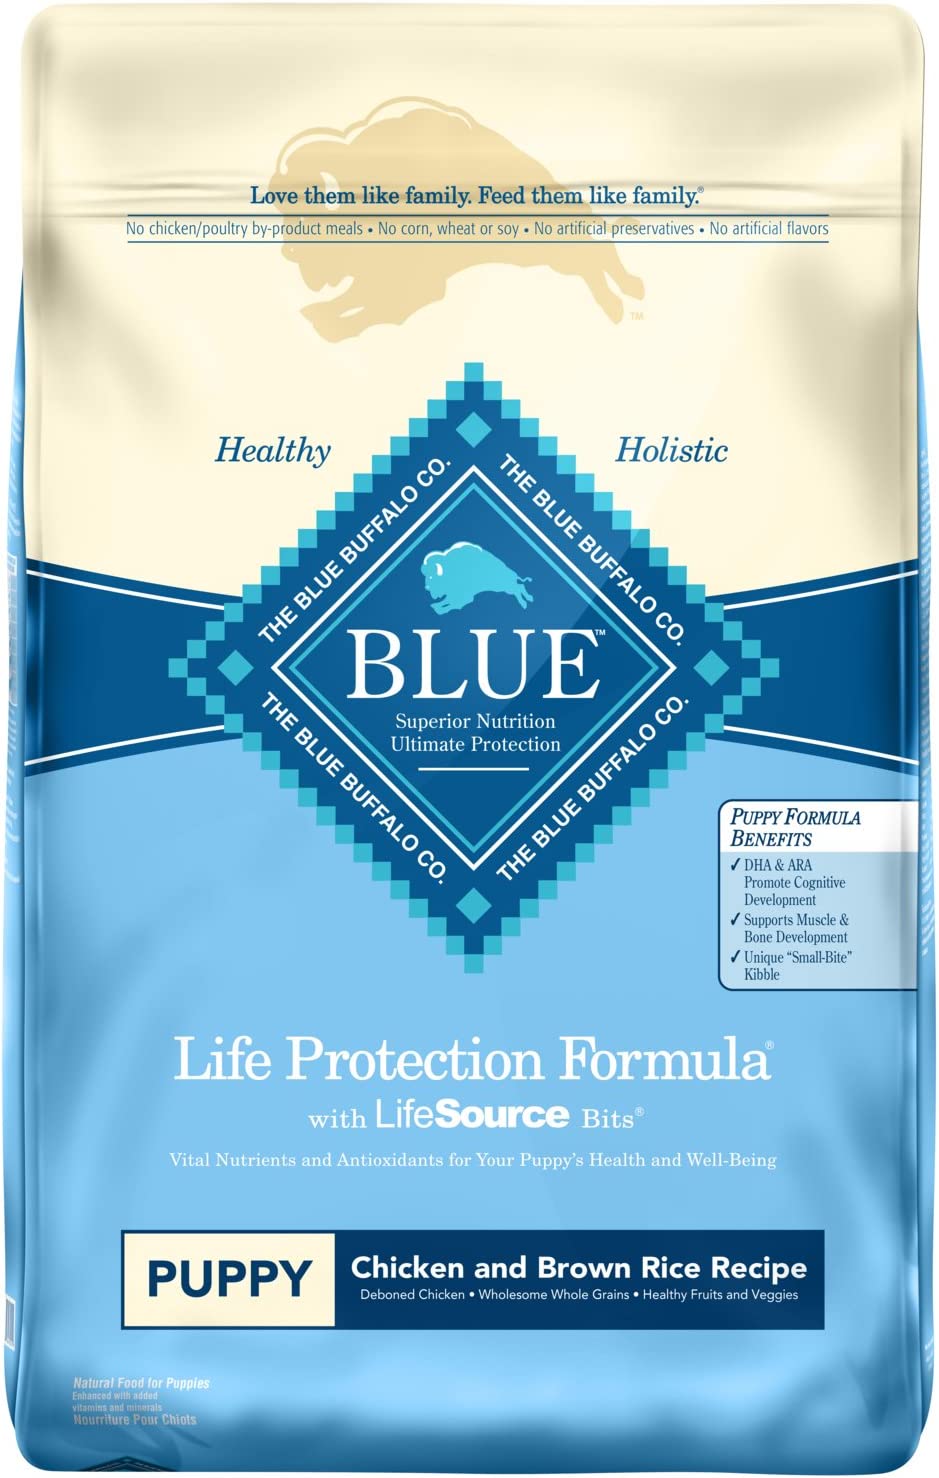 Blue Buffalo with Protection Formula